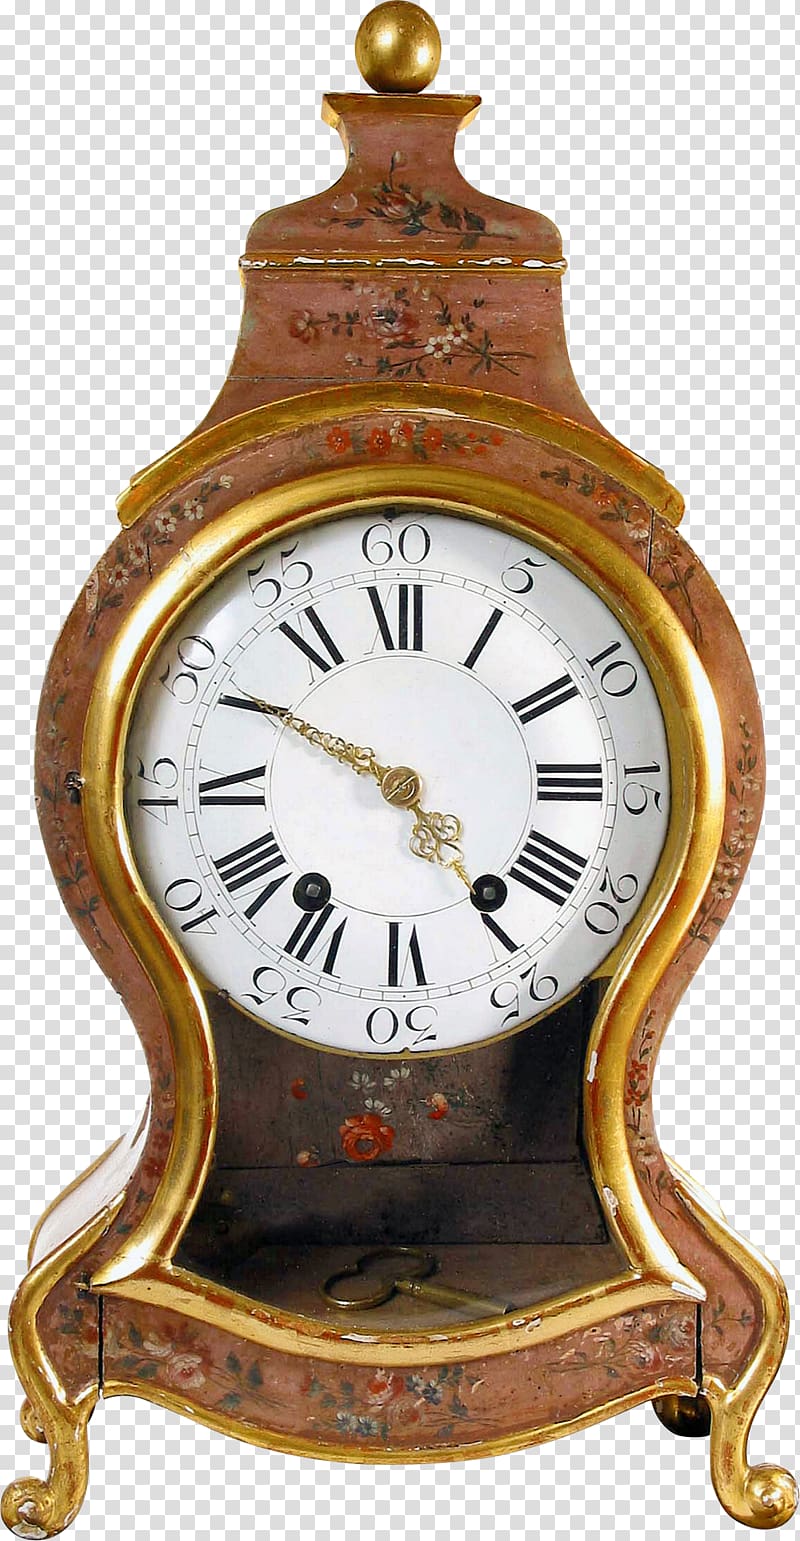 Longcase clock Antique Mantel clock, Vintage wall clock transparent background PNG clipart